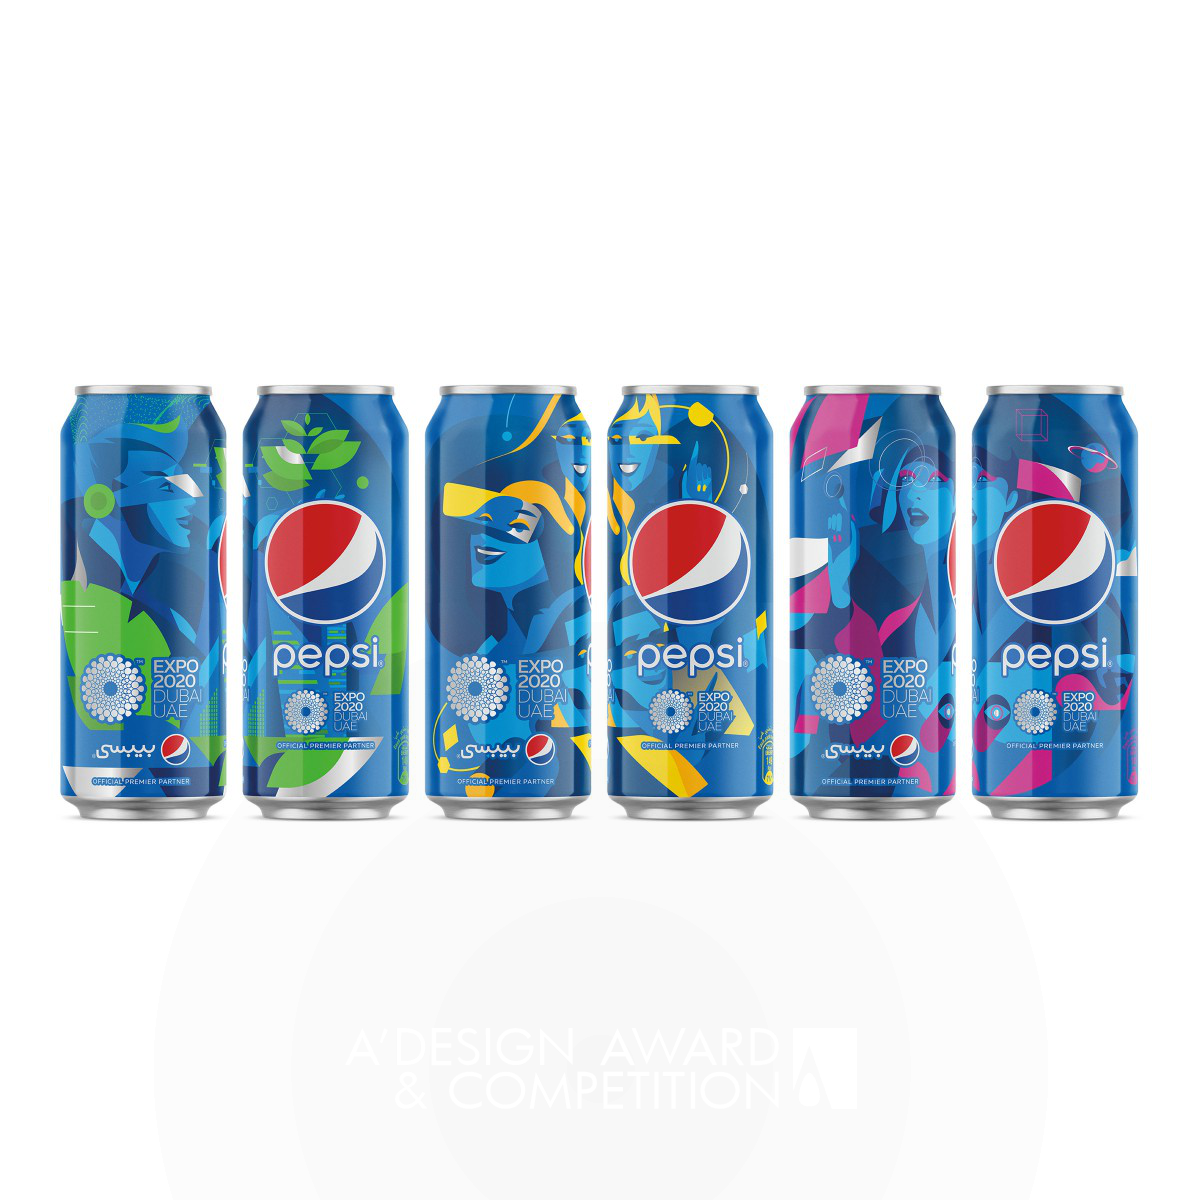 Pepsi Expo 2020 Beverage by PepsiCo Design & Innovation